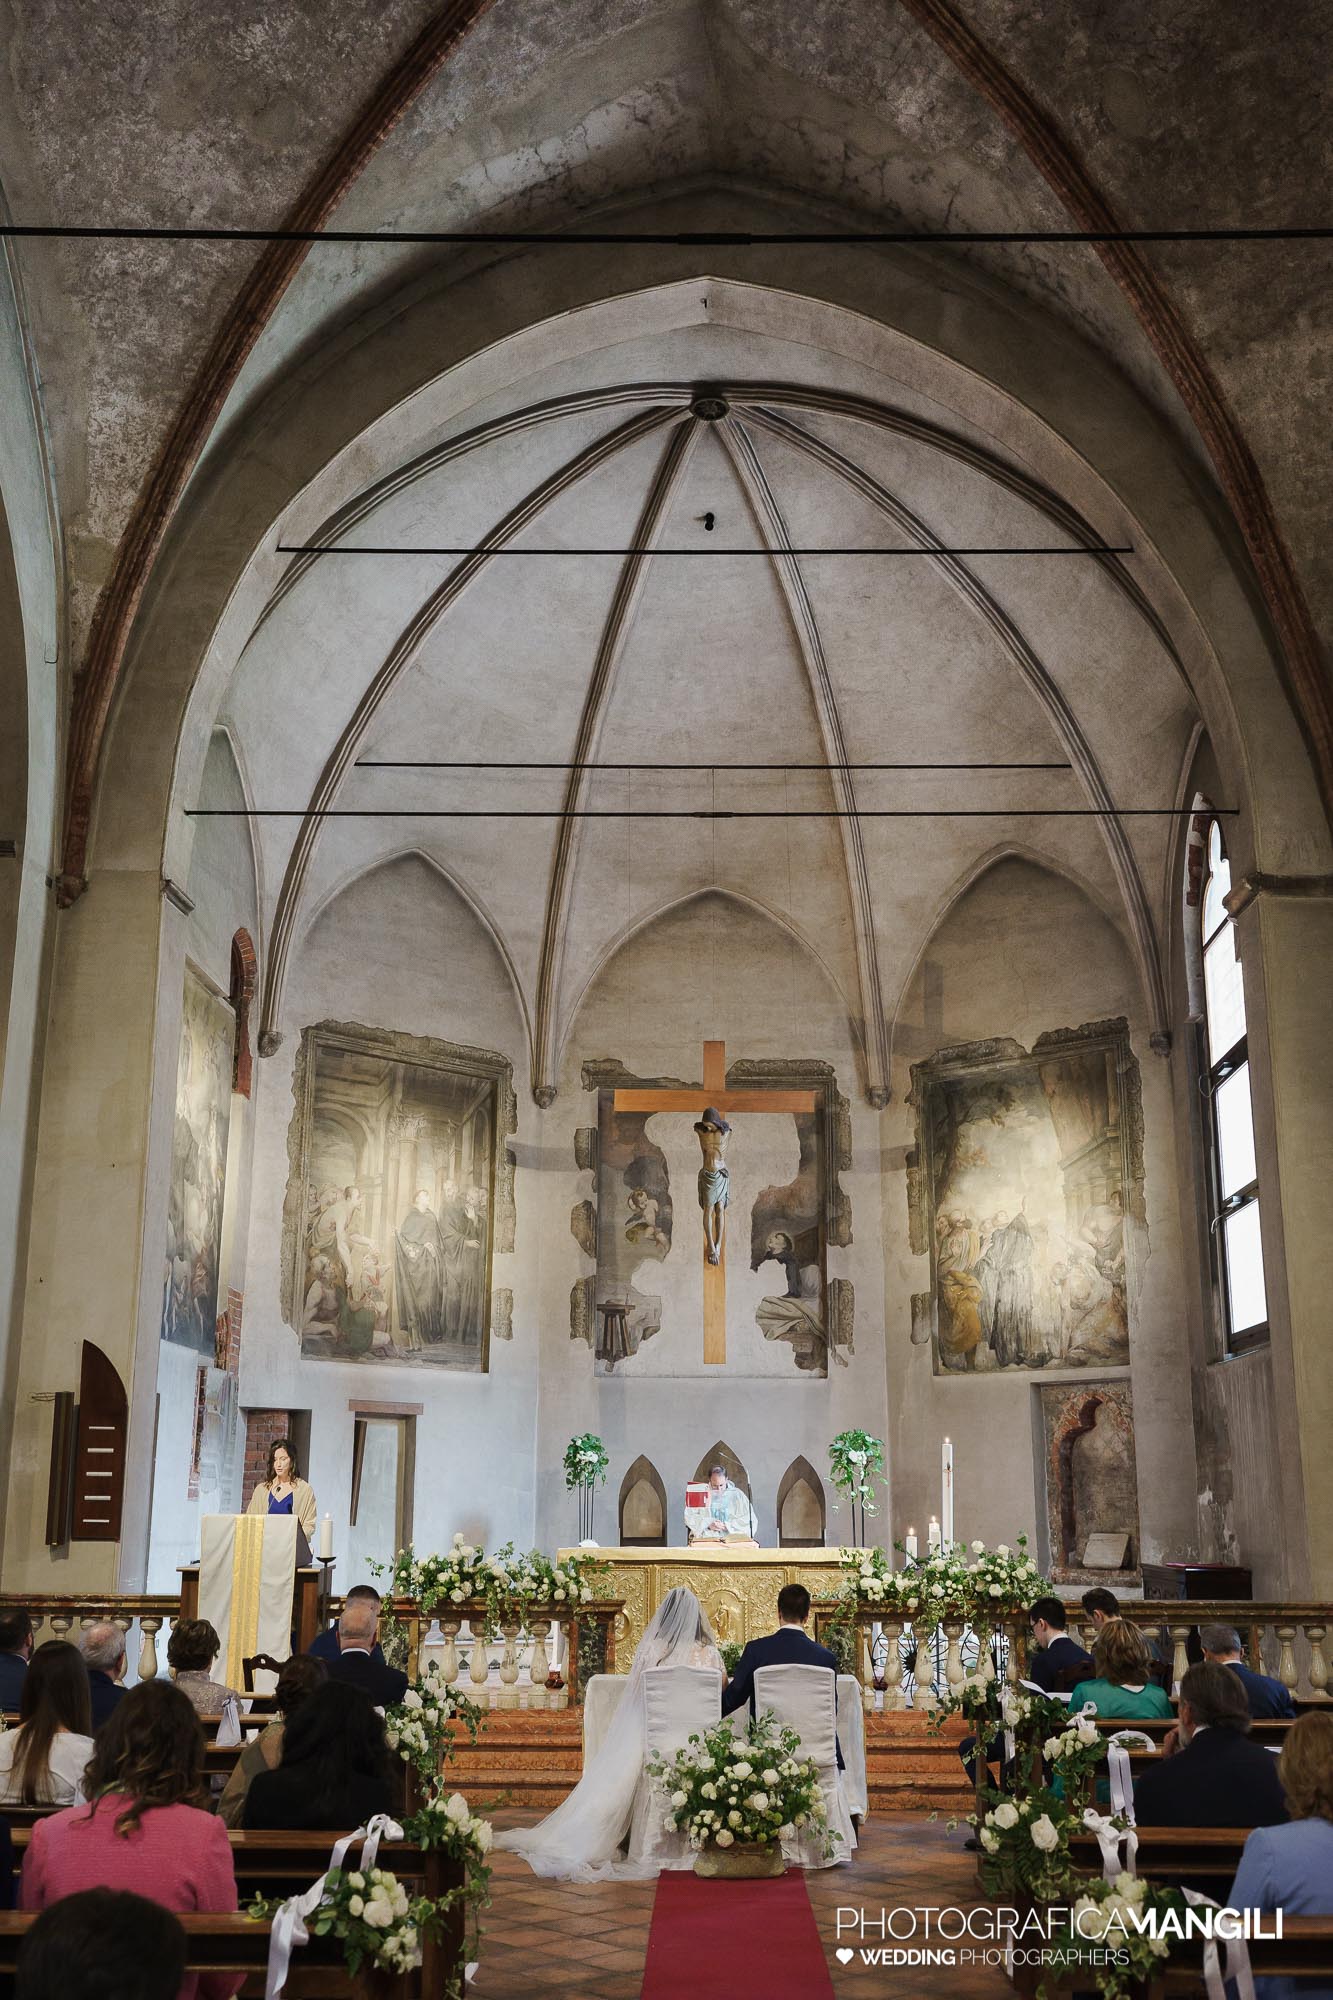 031 foto nozze wedding reportage sposi rito religioso chiesa milano chiara oliviero